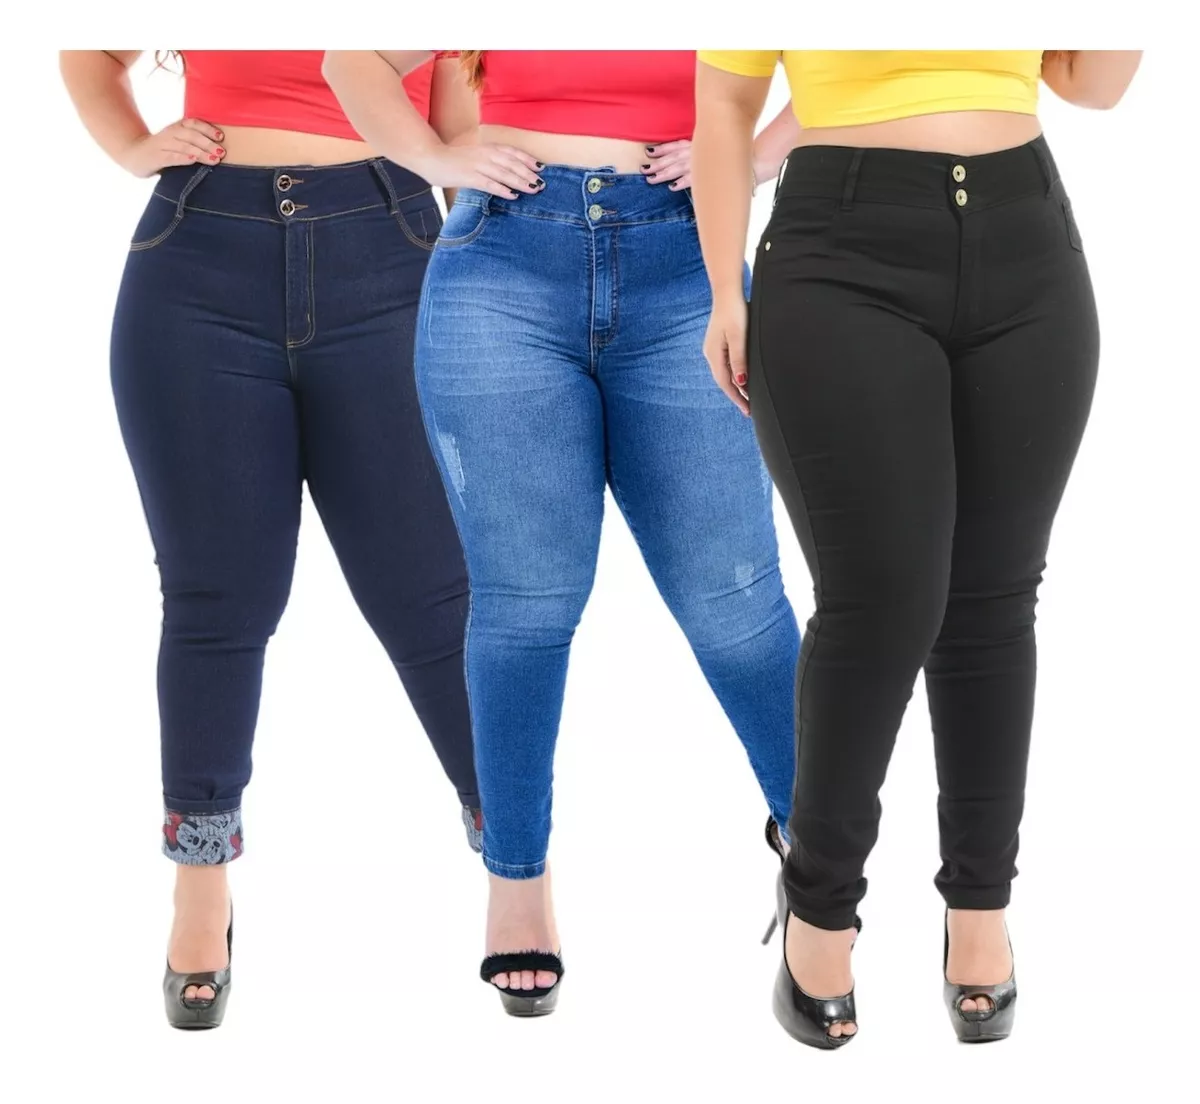 Kit 3 Calcas Feminino Skinny Jeans Hot Pants Plus Size Lycra